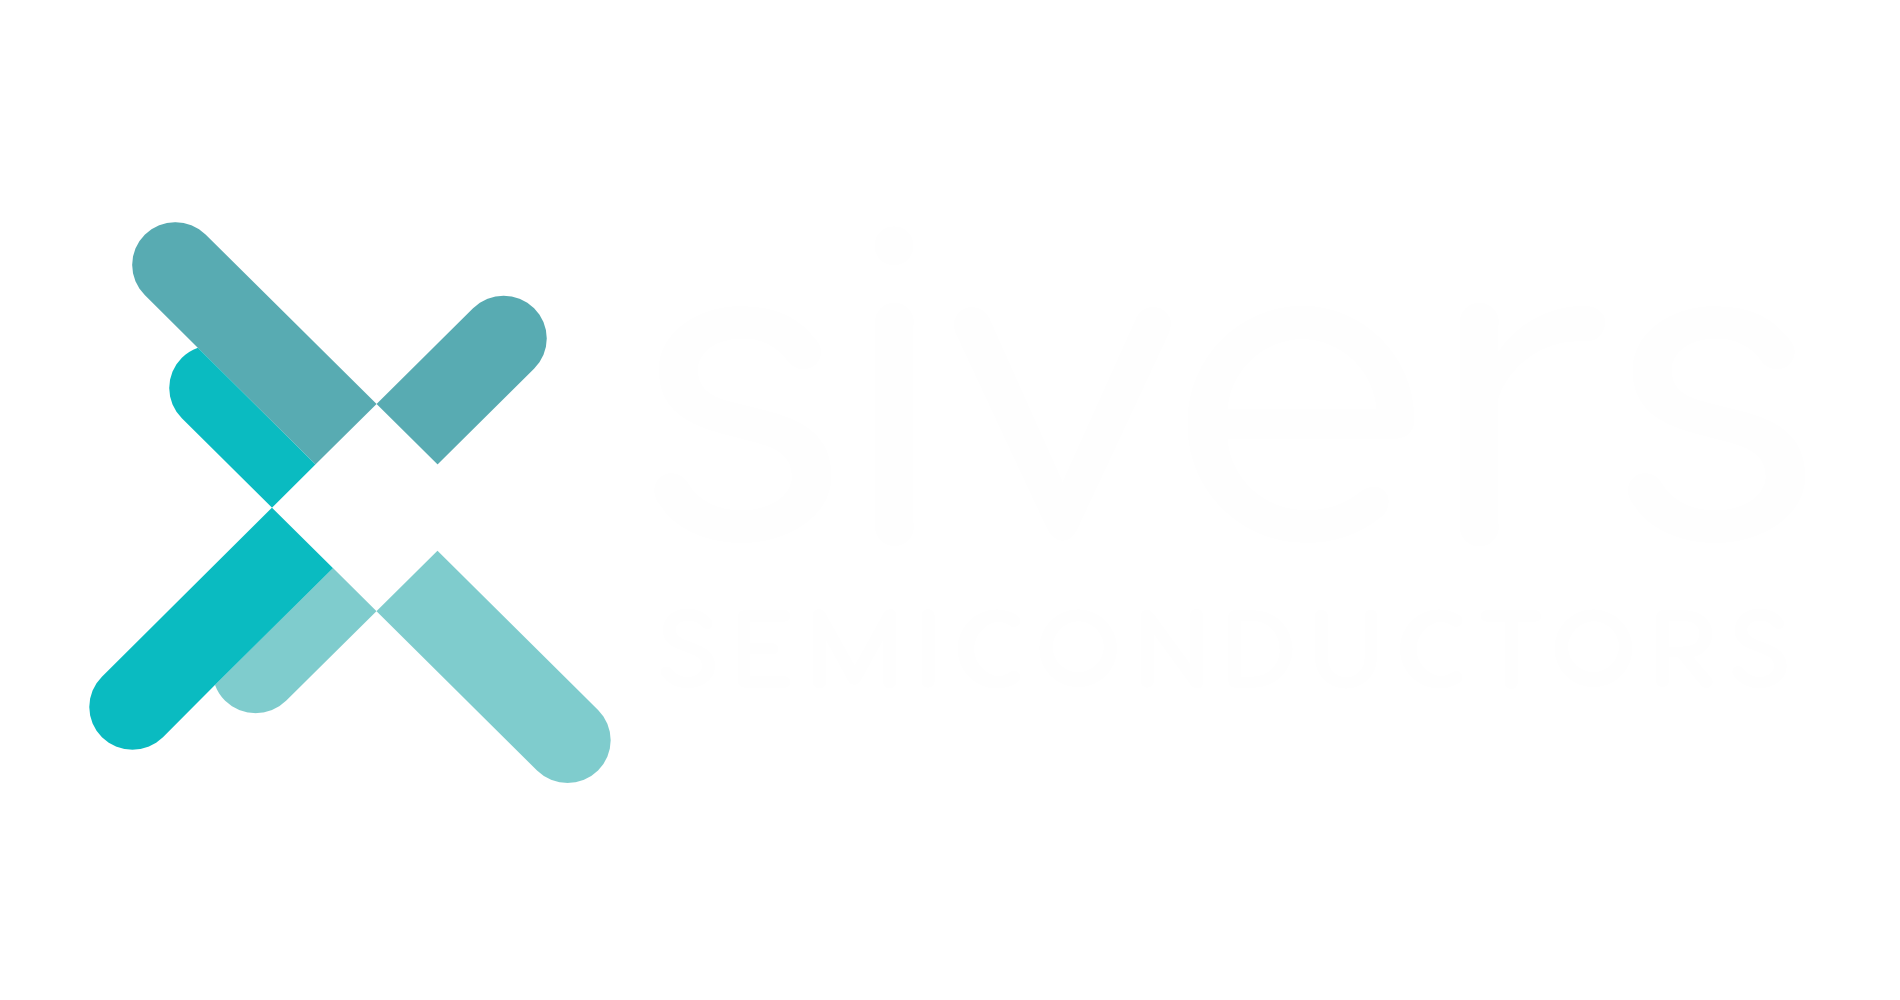 Sivers Semiconductors logo